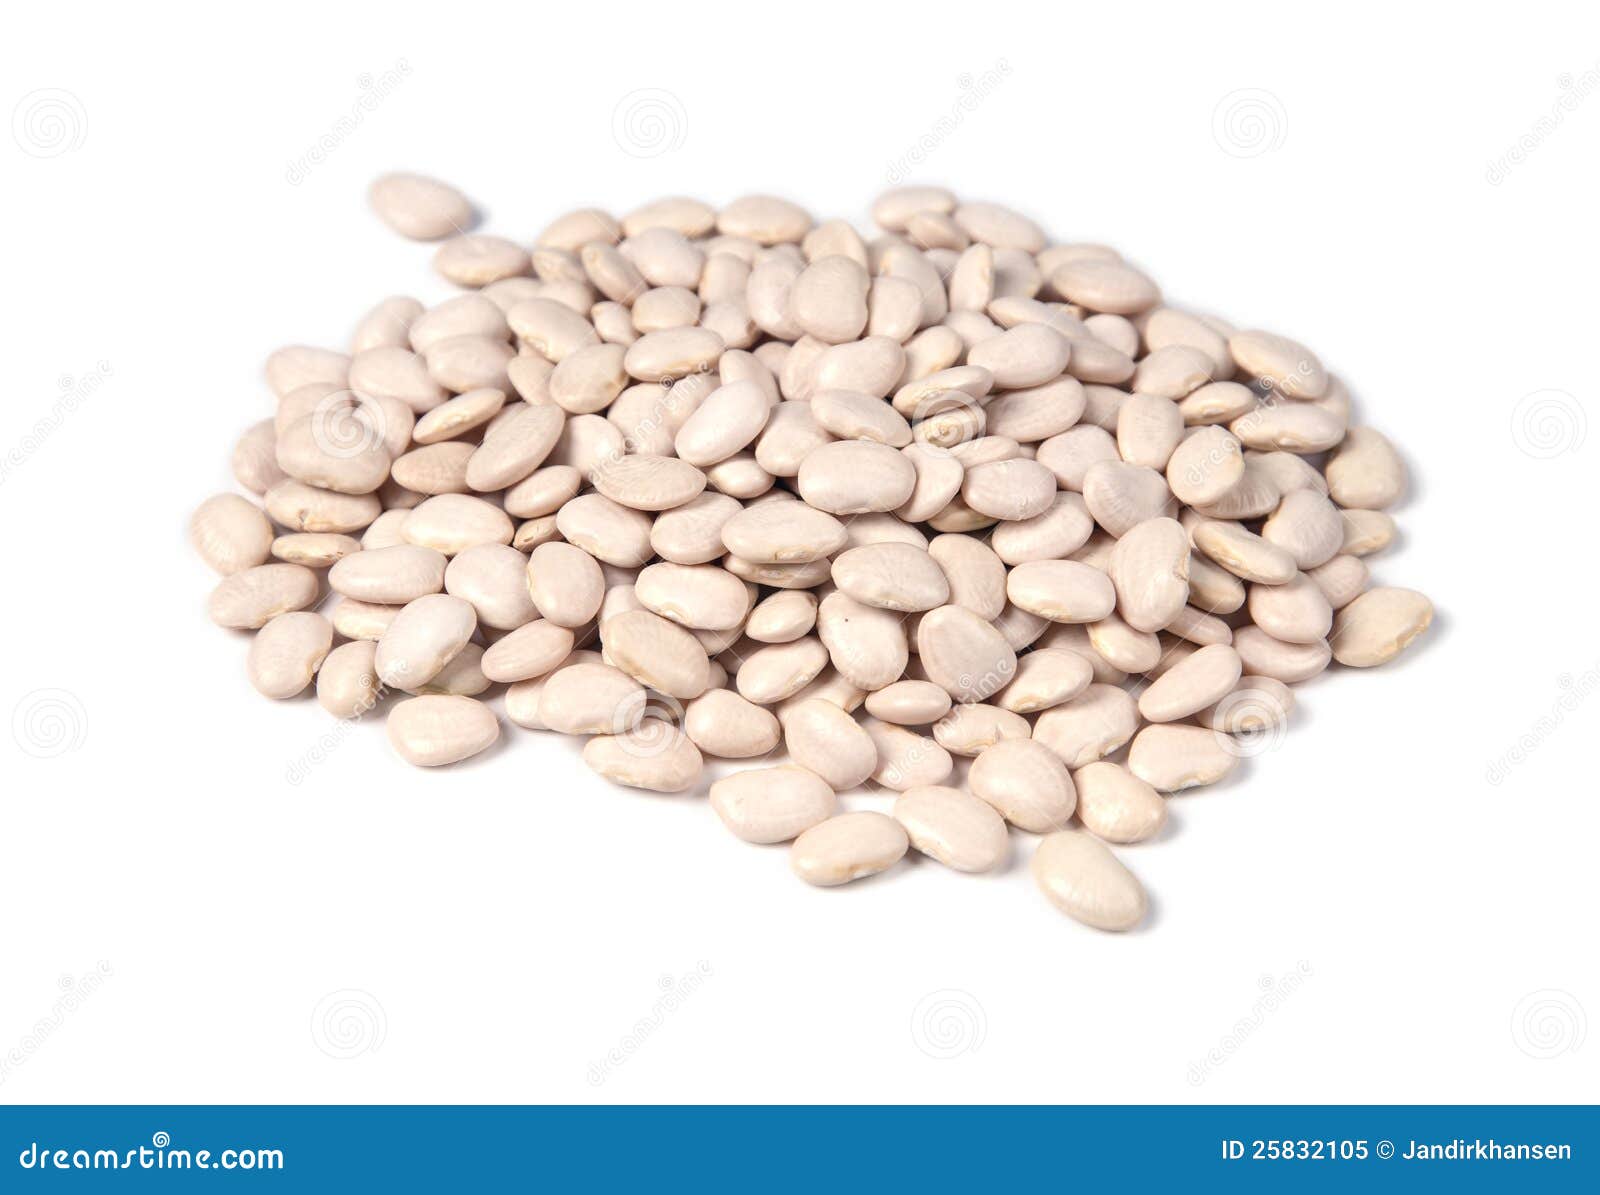 lima-beans, 